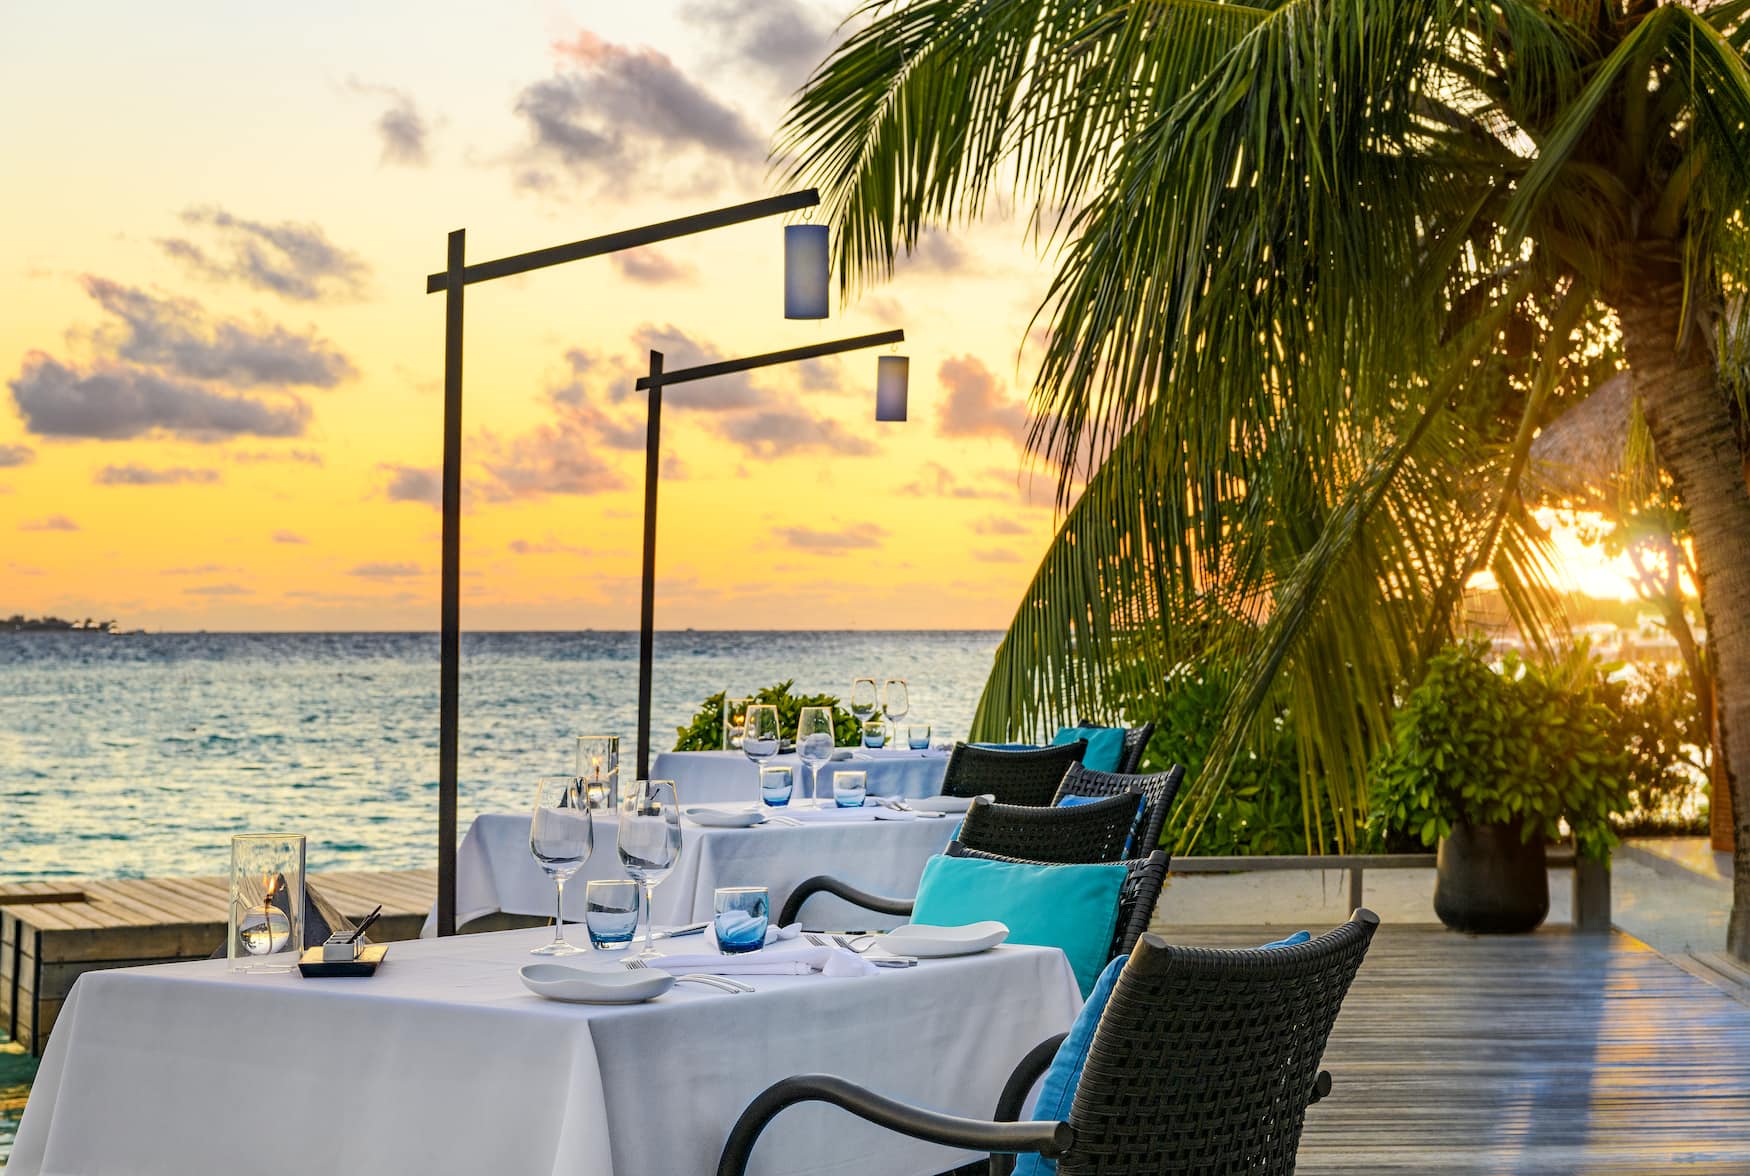 Restaurant in the Maldives